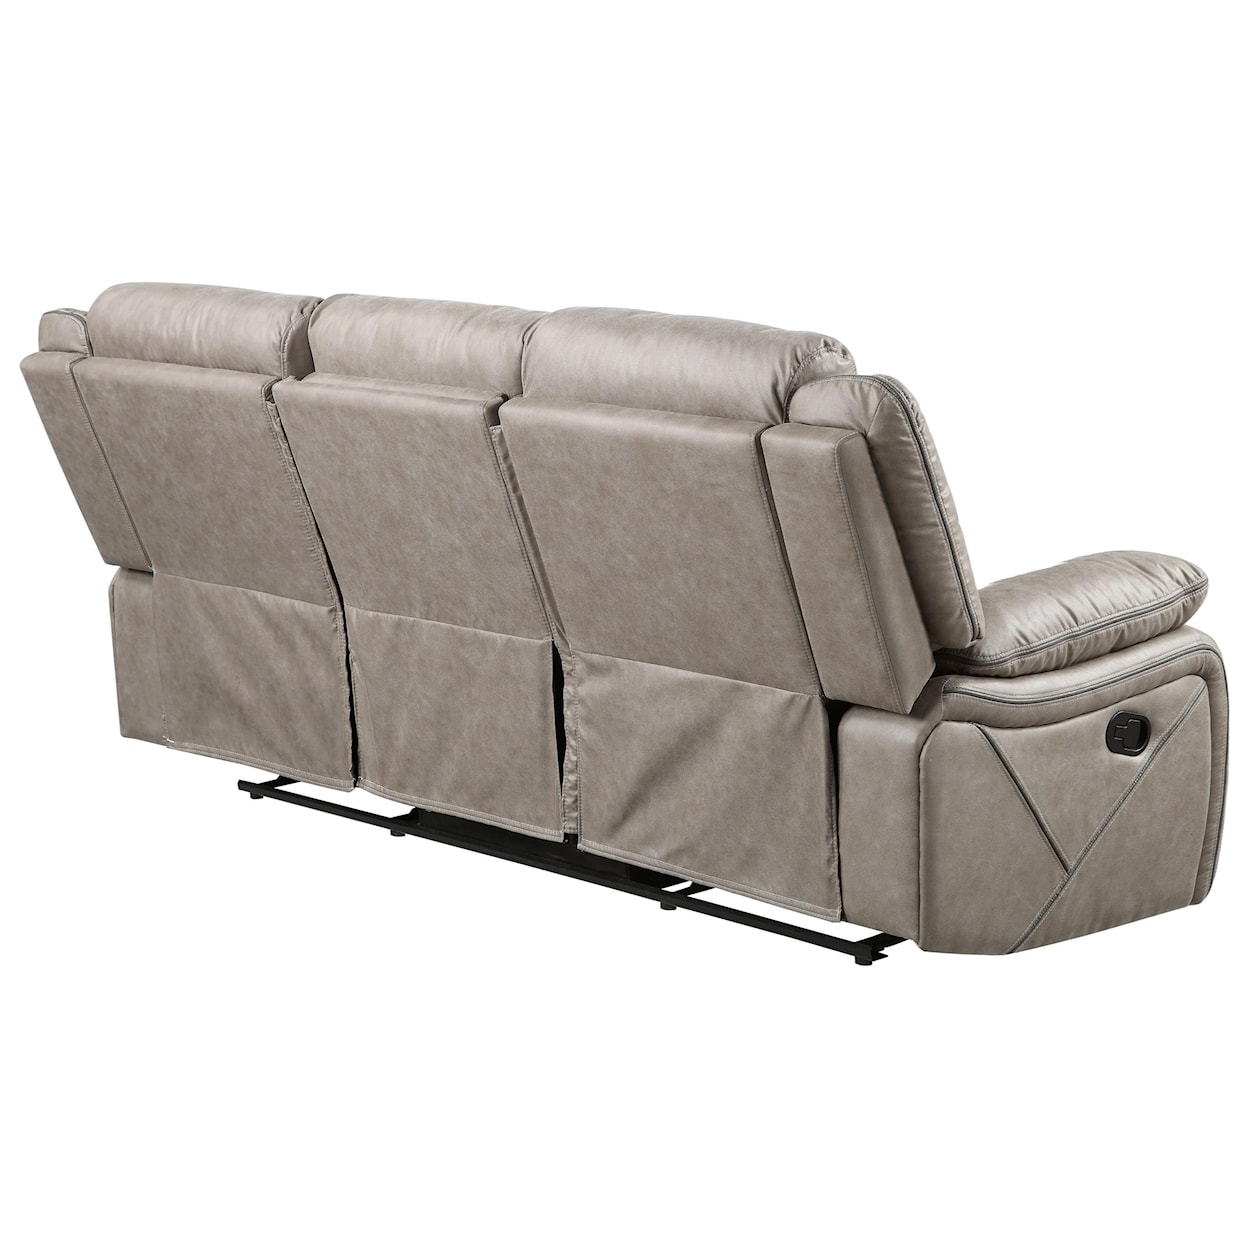 Steve Silver Tyson Manual Recliner Sofa